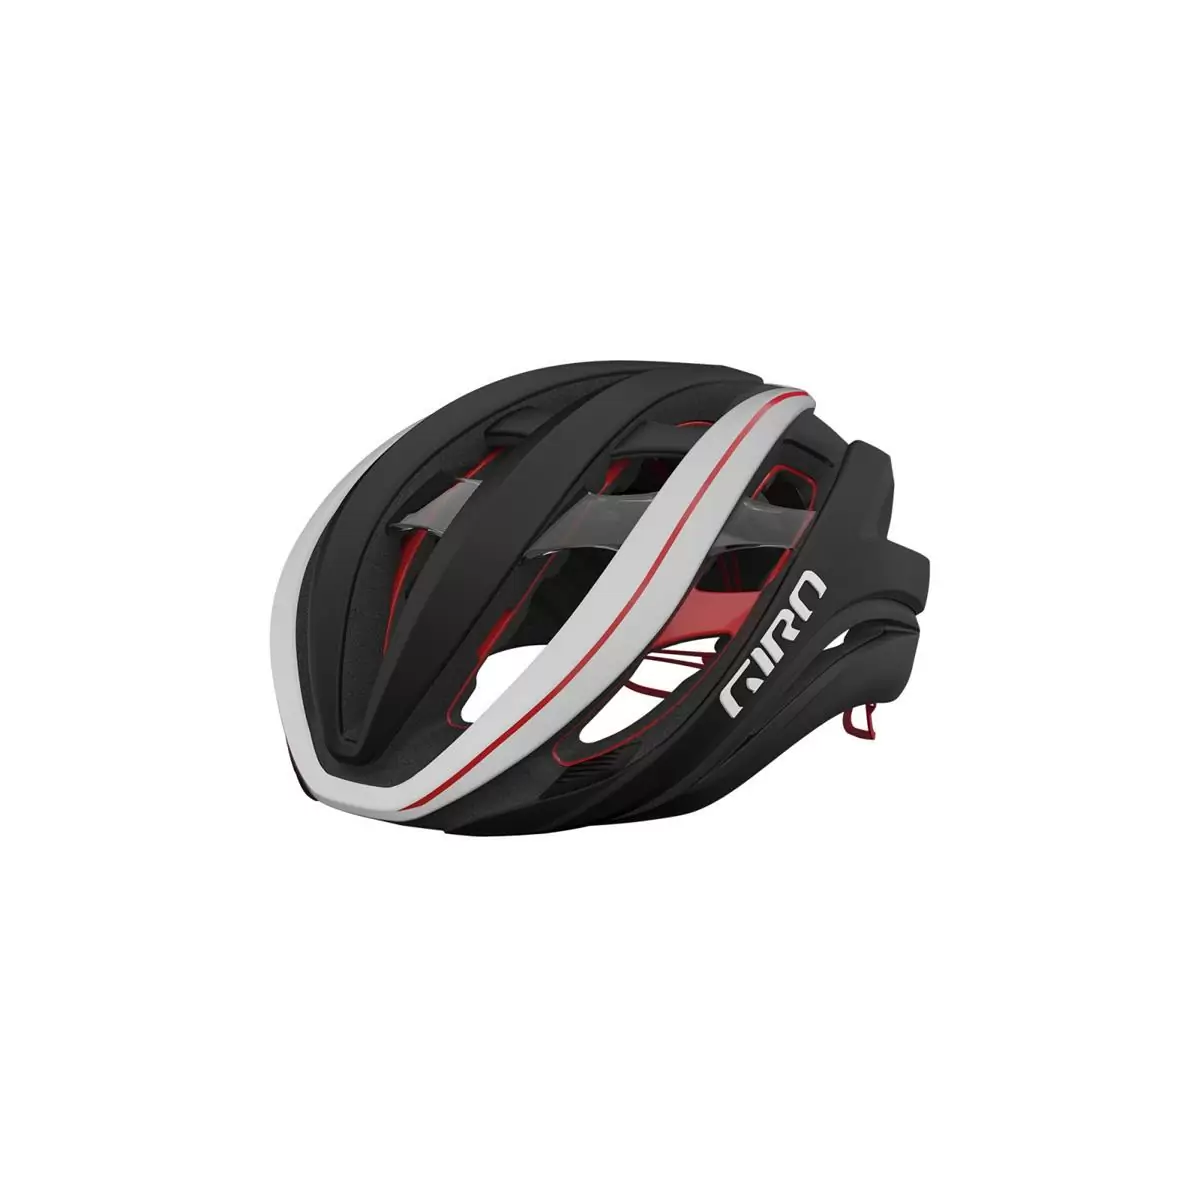 Helmet Aether Spherical MIPS Black/Red Size M (55-59cm) - image